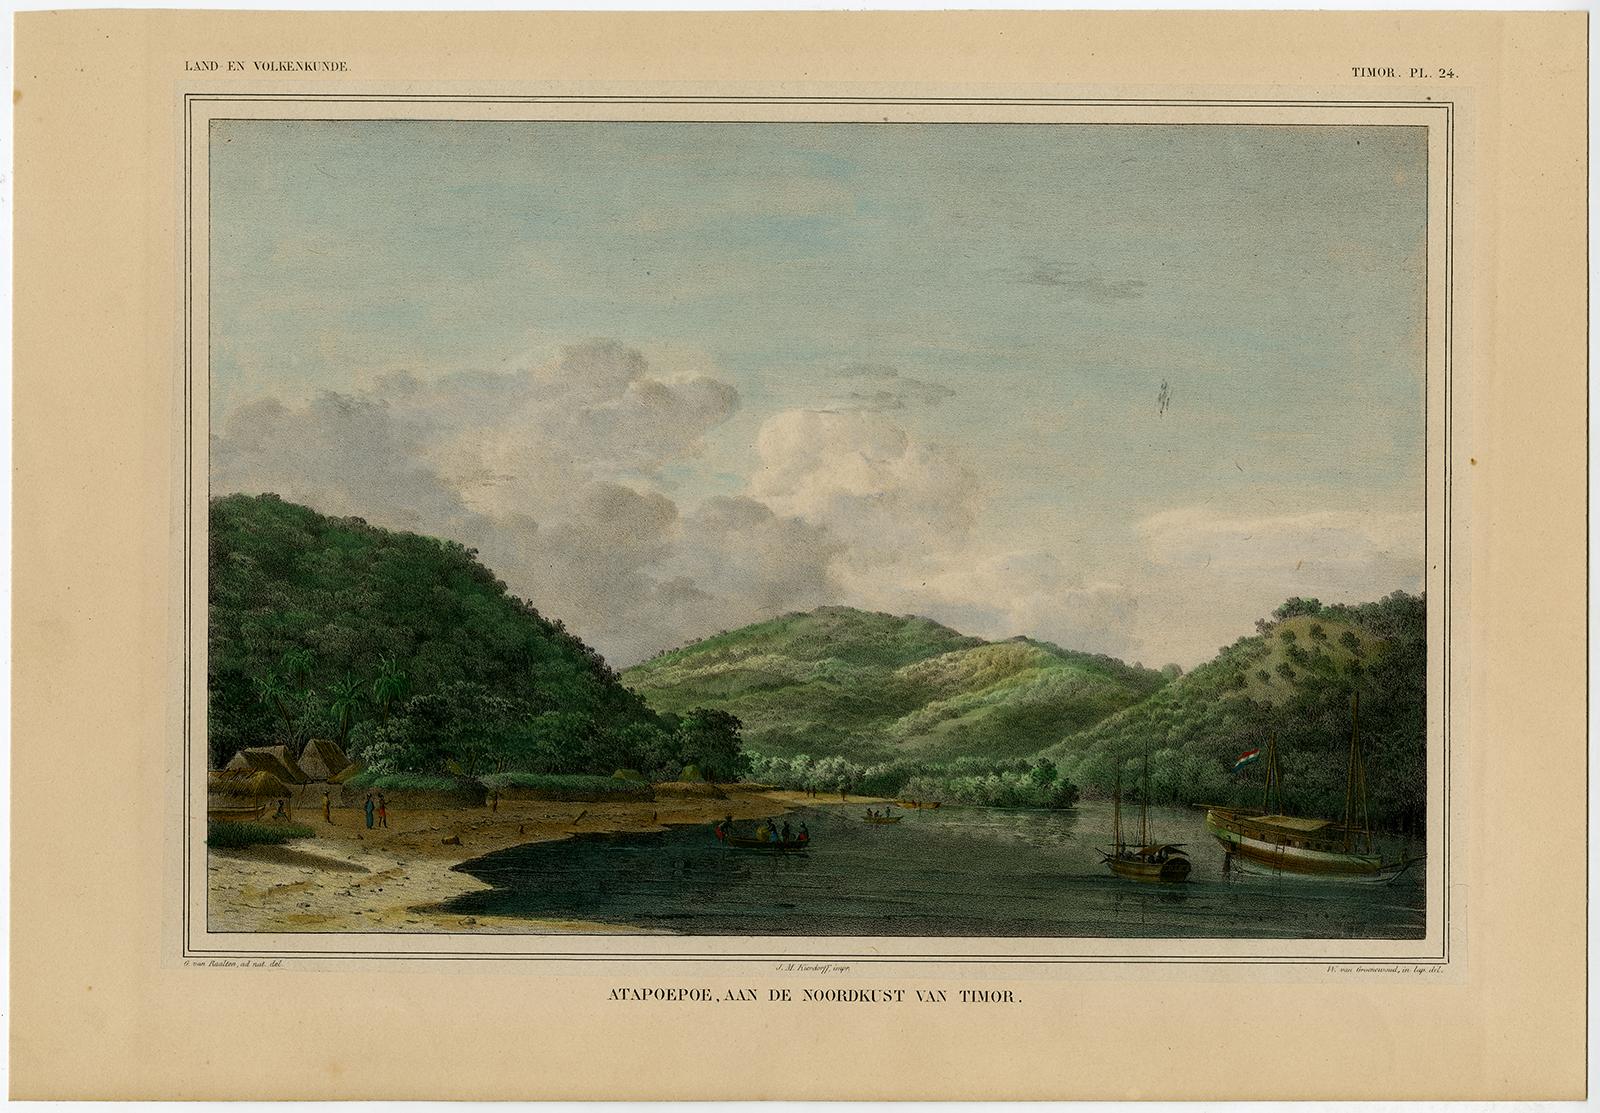 Wilhelmus van Groenewoud Landscape Print - Atatoepoe aan de noordkust van Timor.